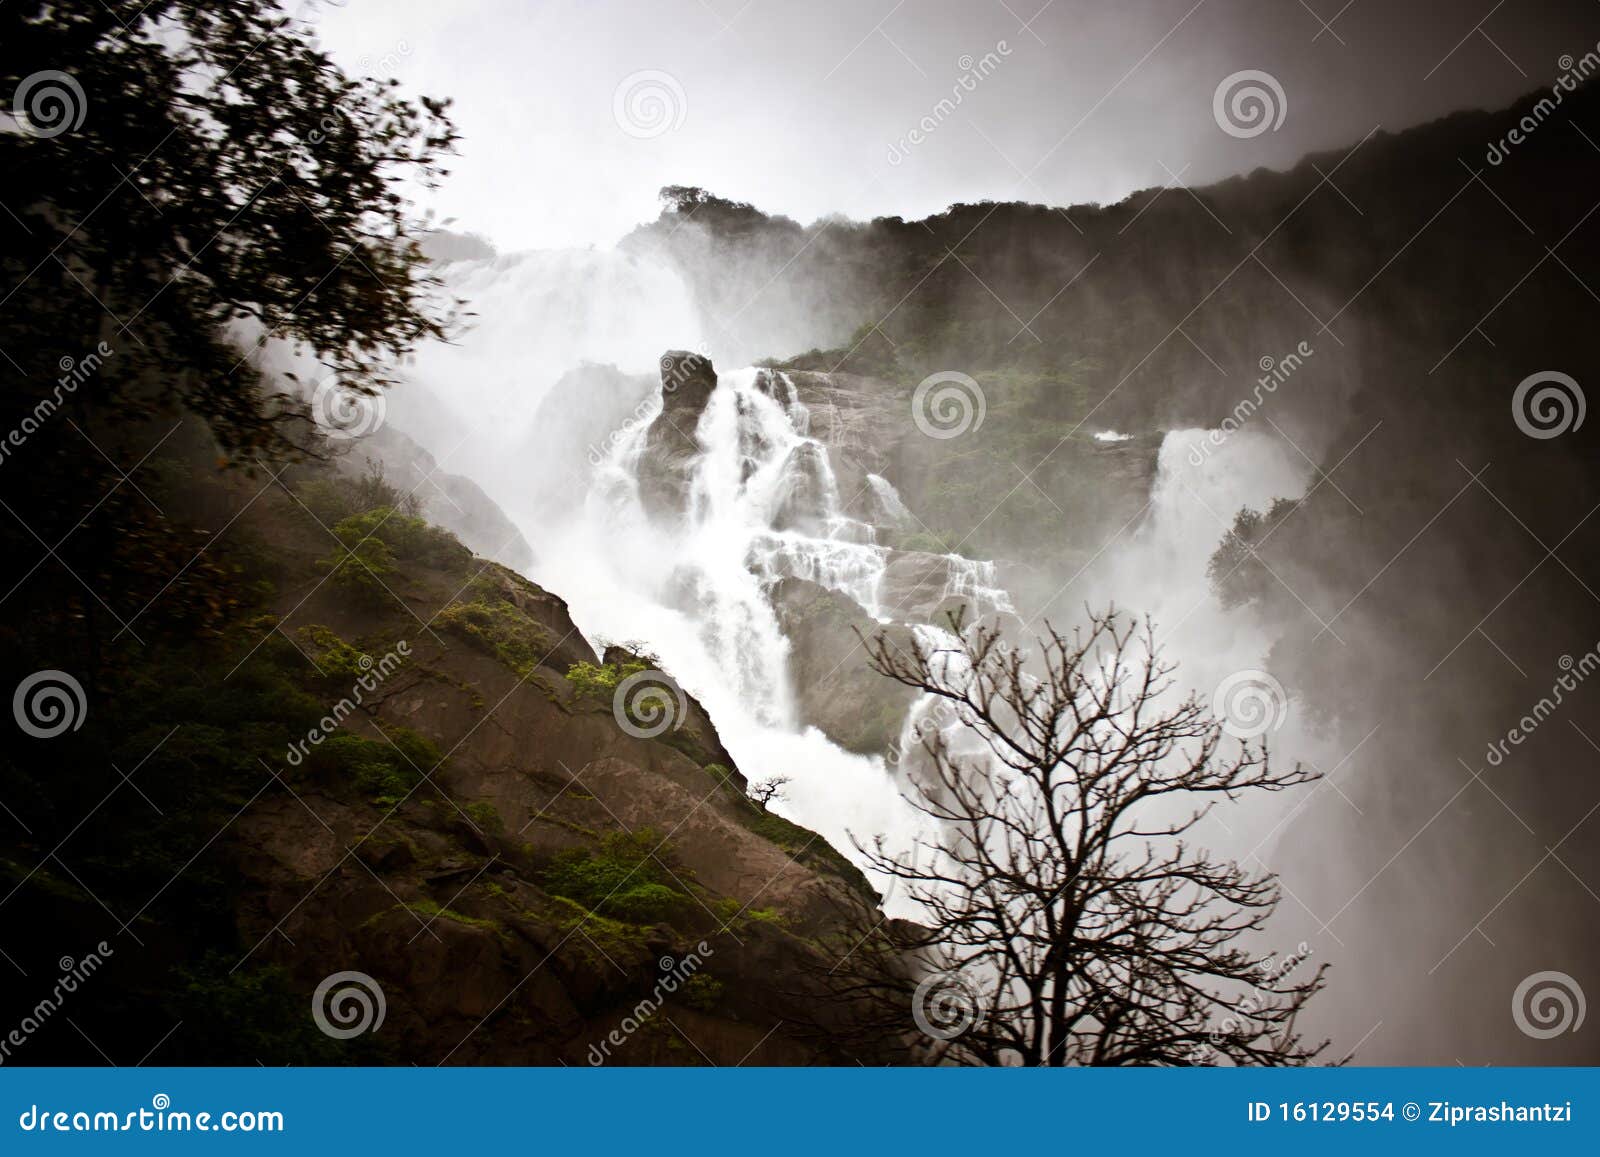 waterfall in karnataka (india)